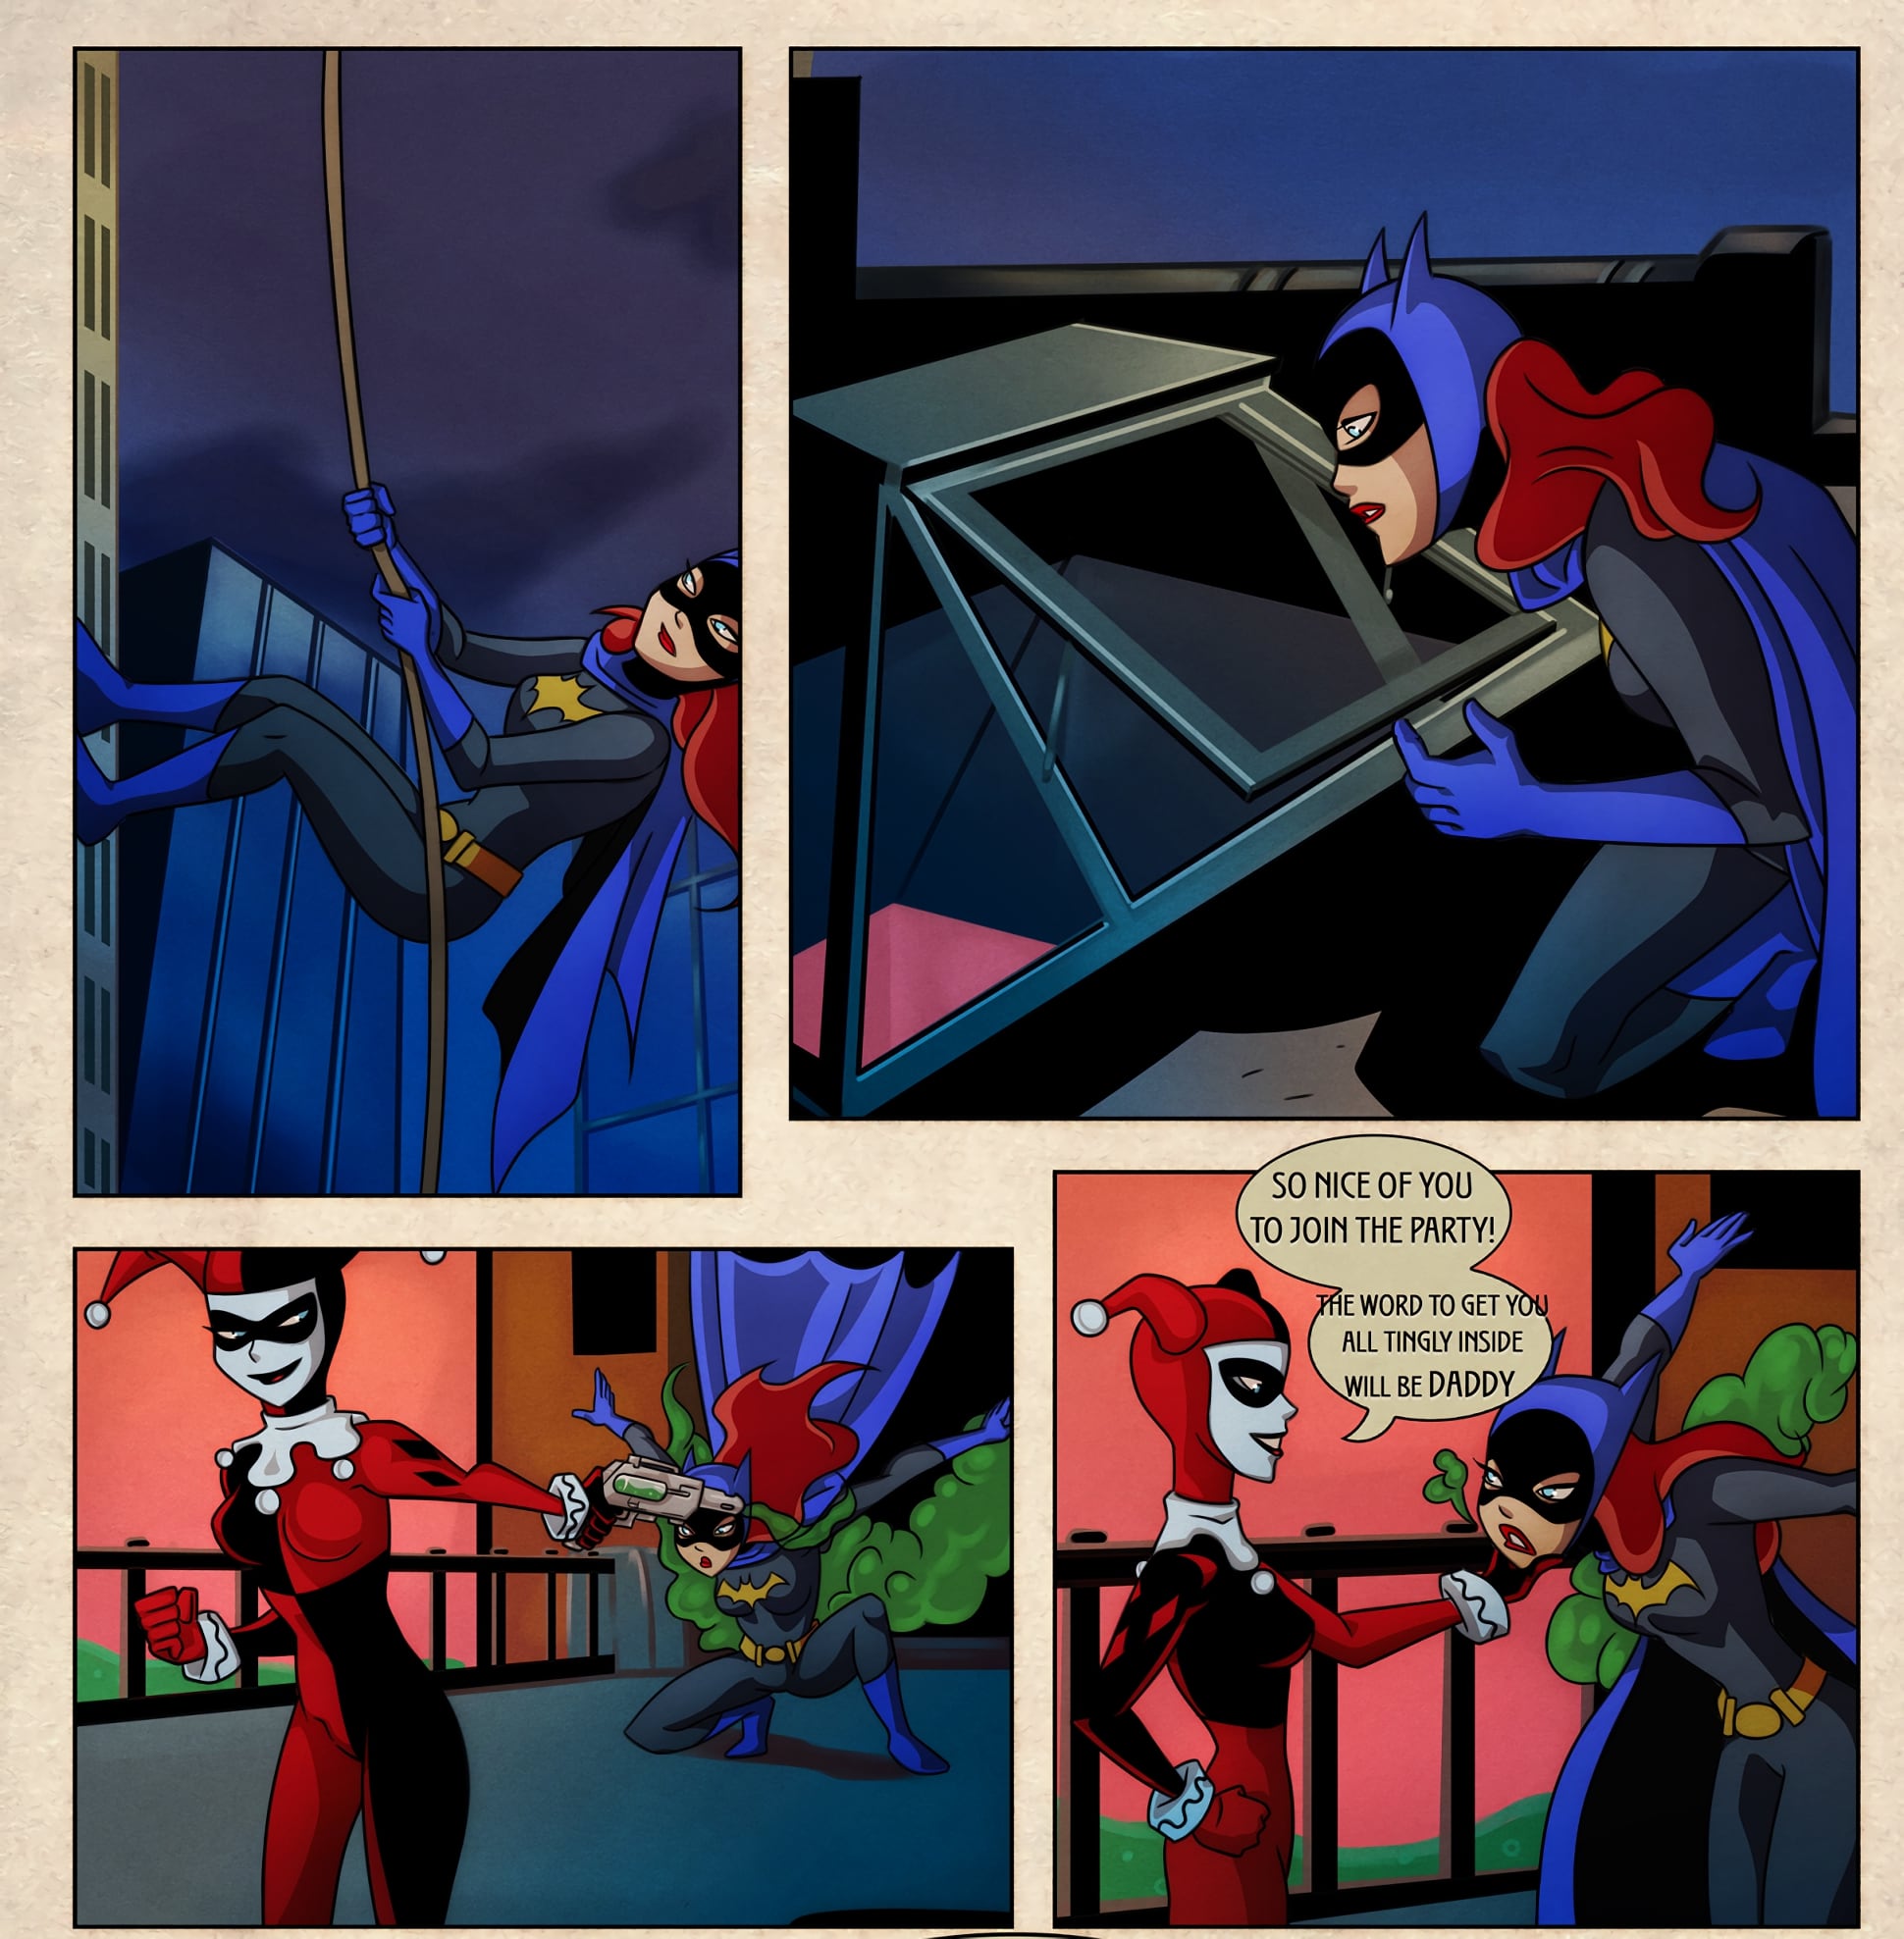 Batgirl animated porn